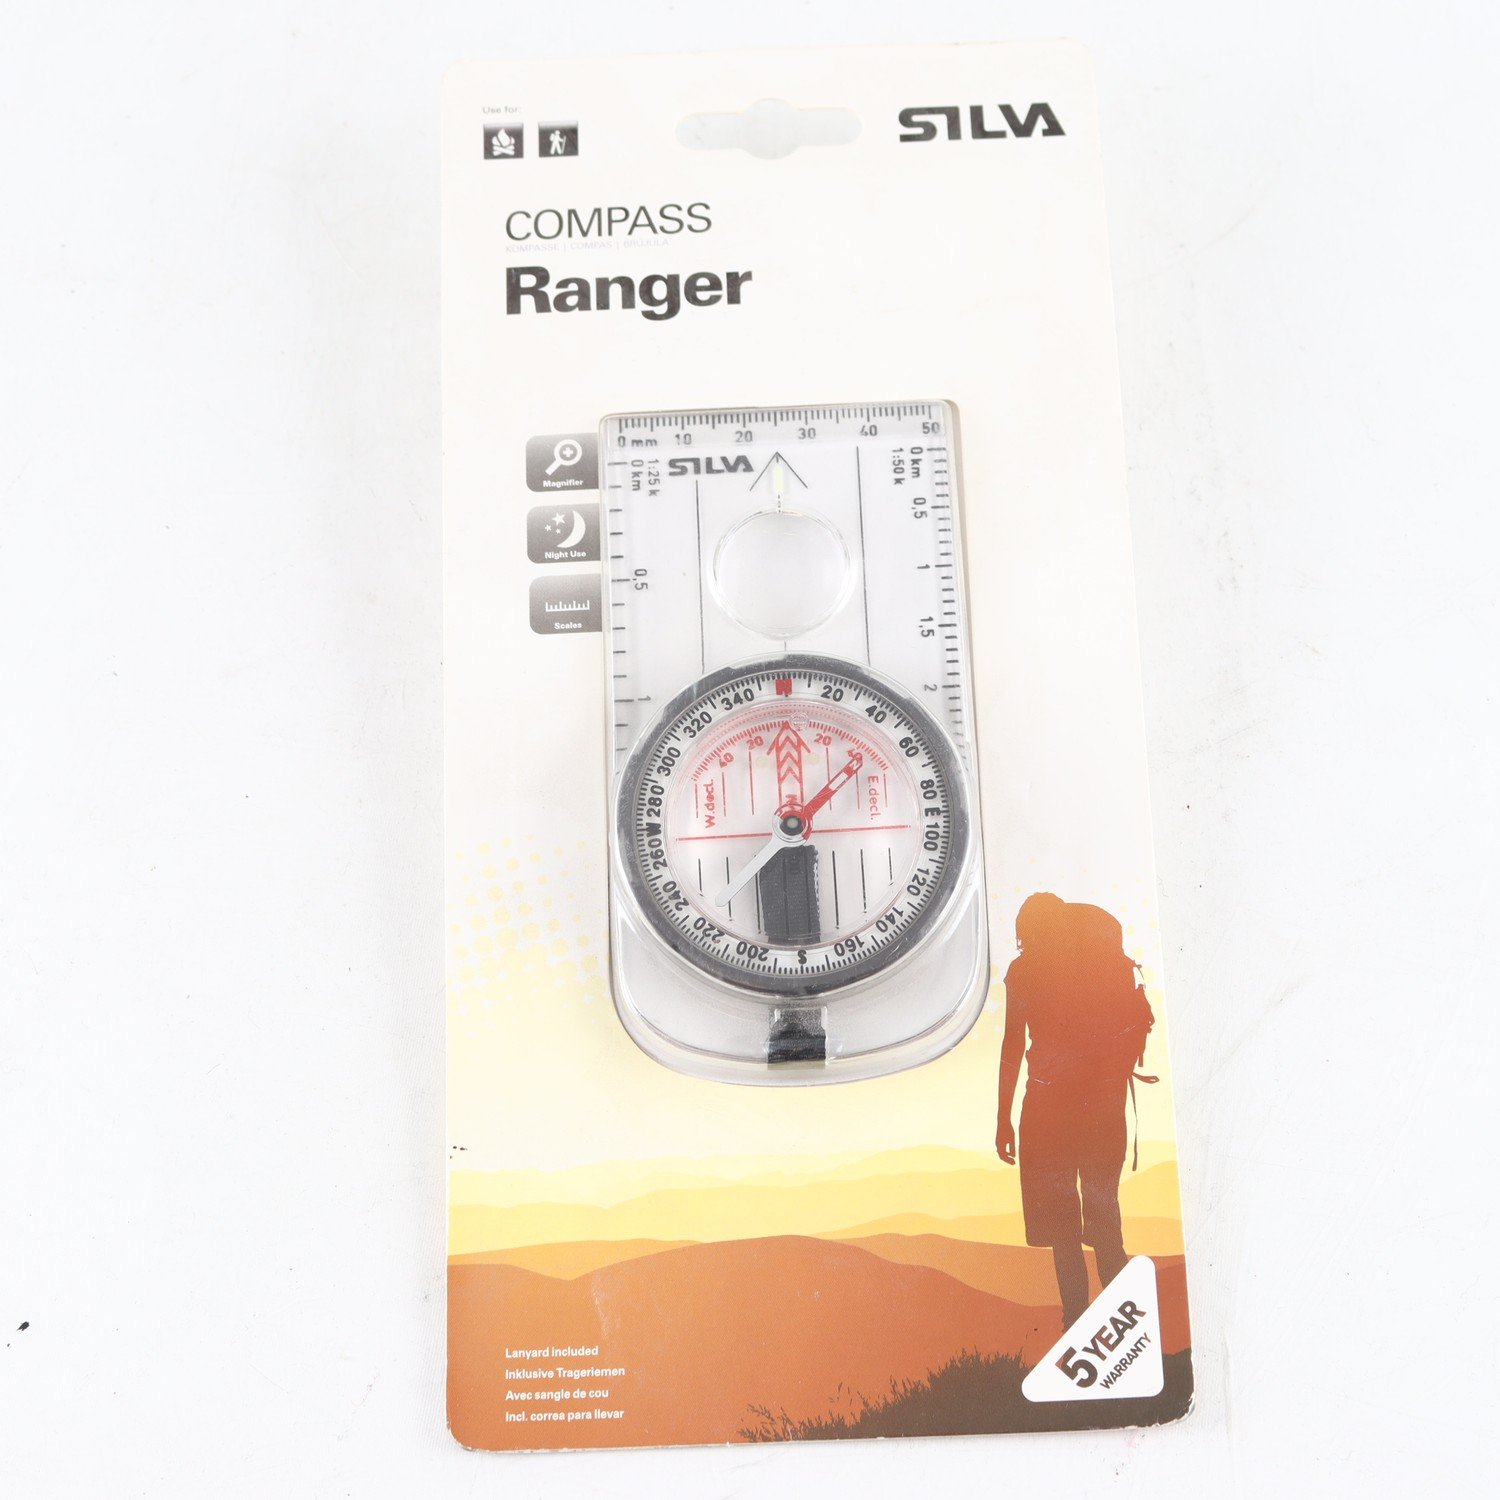 Kompass, Silva, Ranger